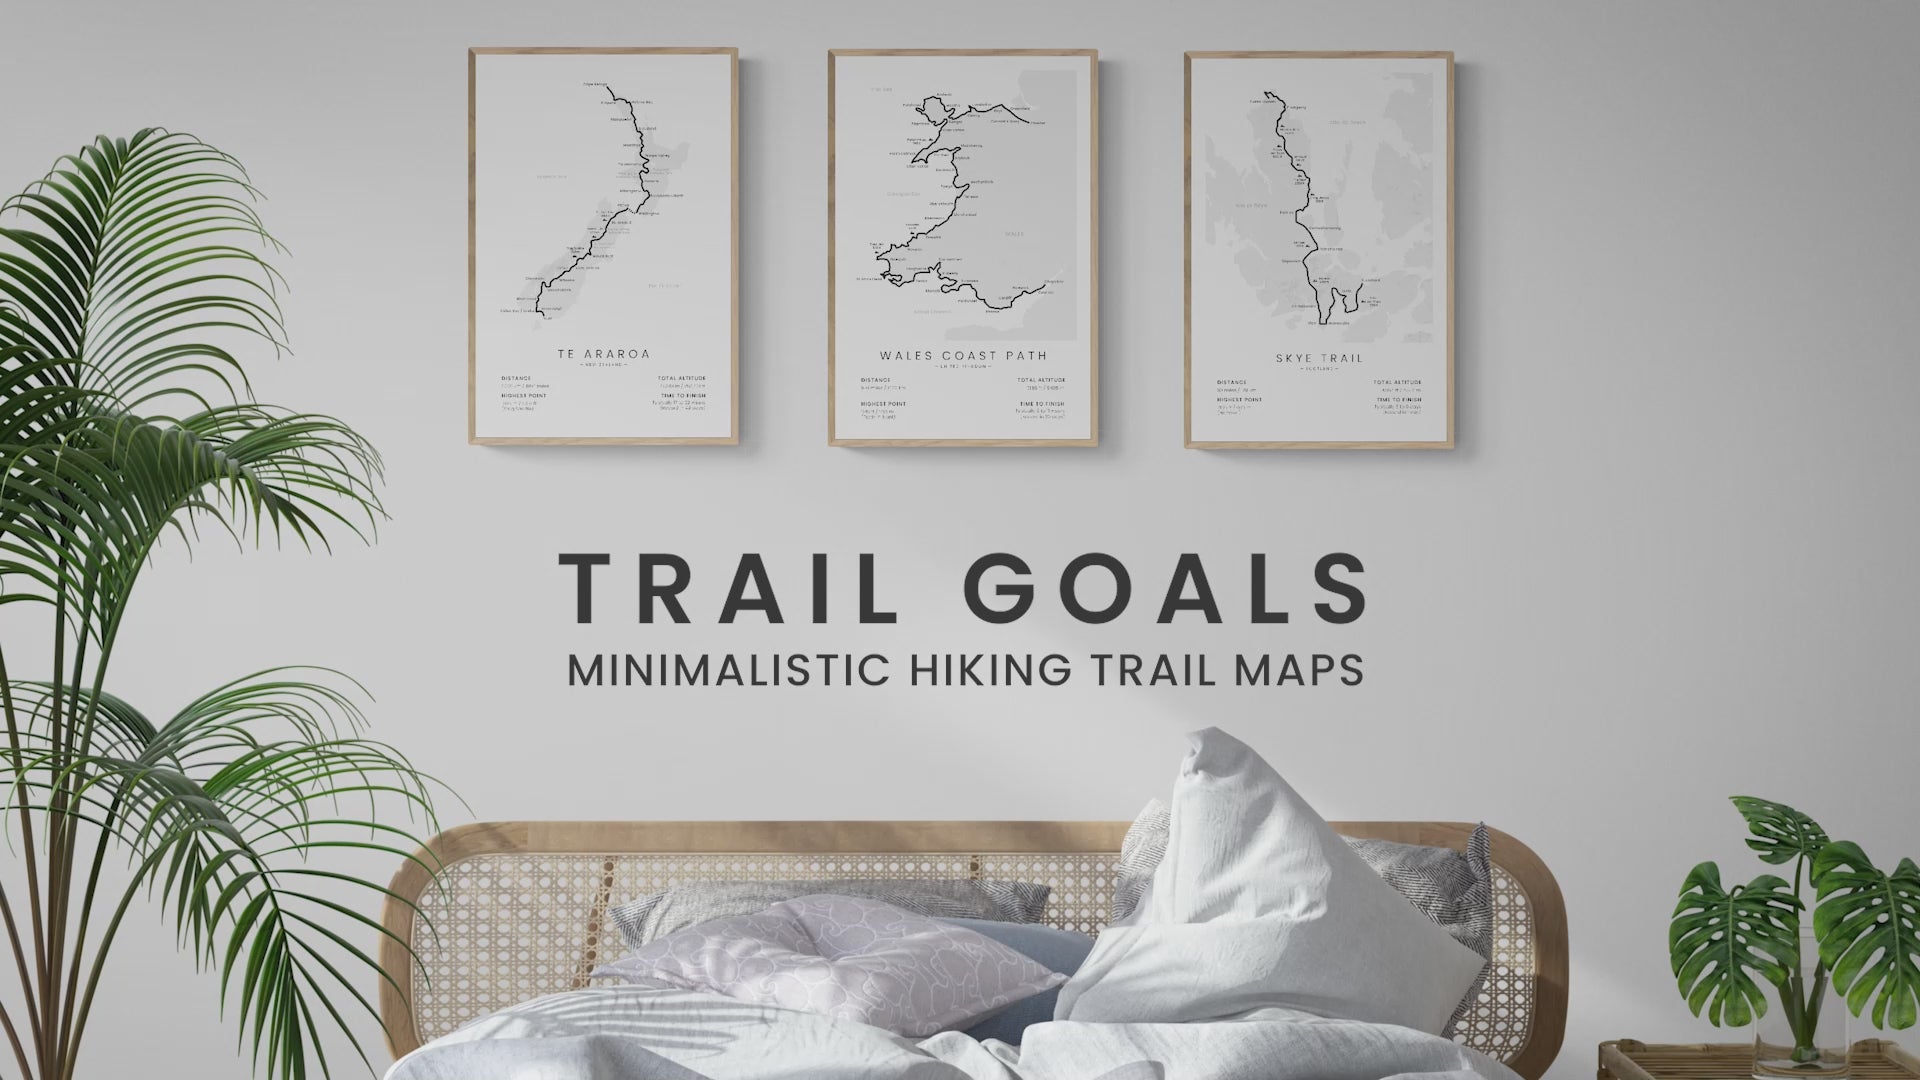 Load video: Trailgoals minimalistic hiking trail map posters